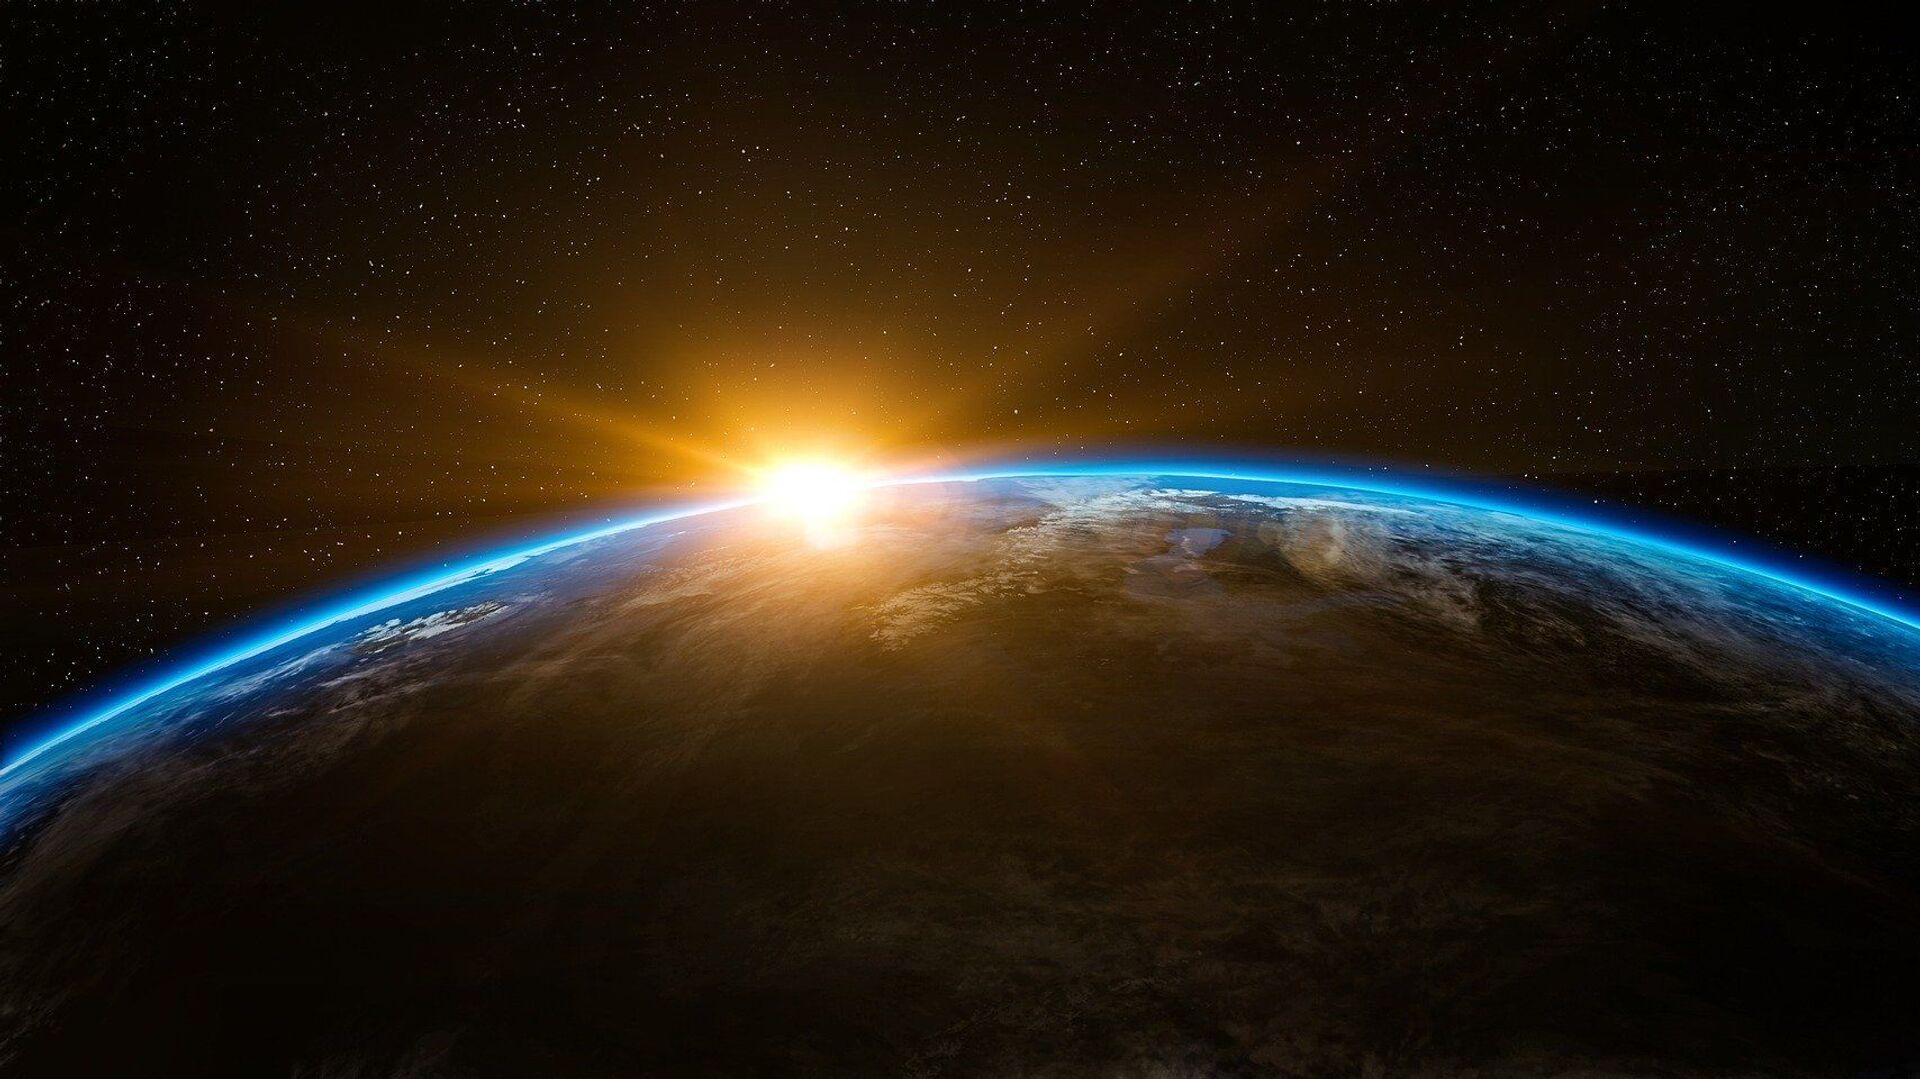 El Sol se levanta sobre la Tierra - Sputnik Mundo, 1920, 24.09.2021